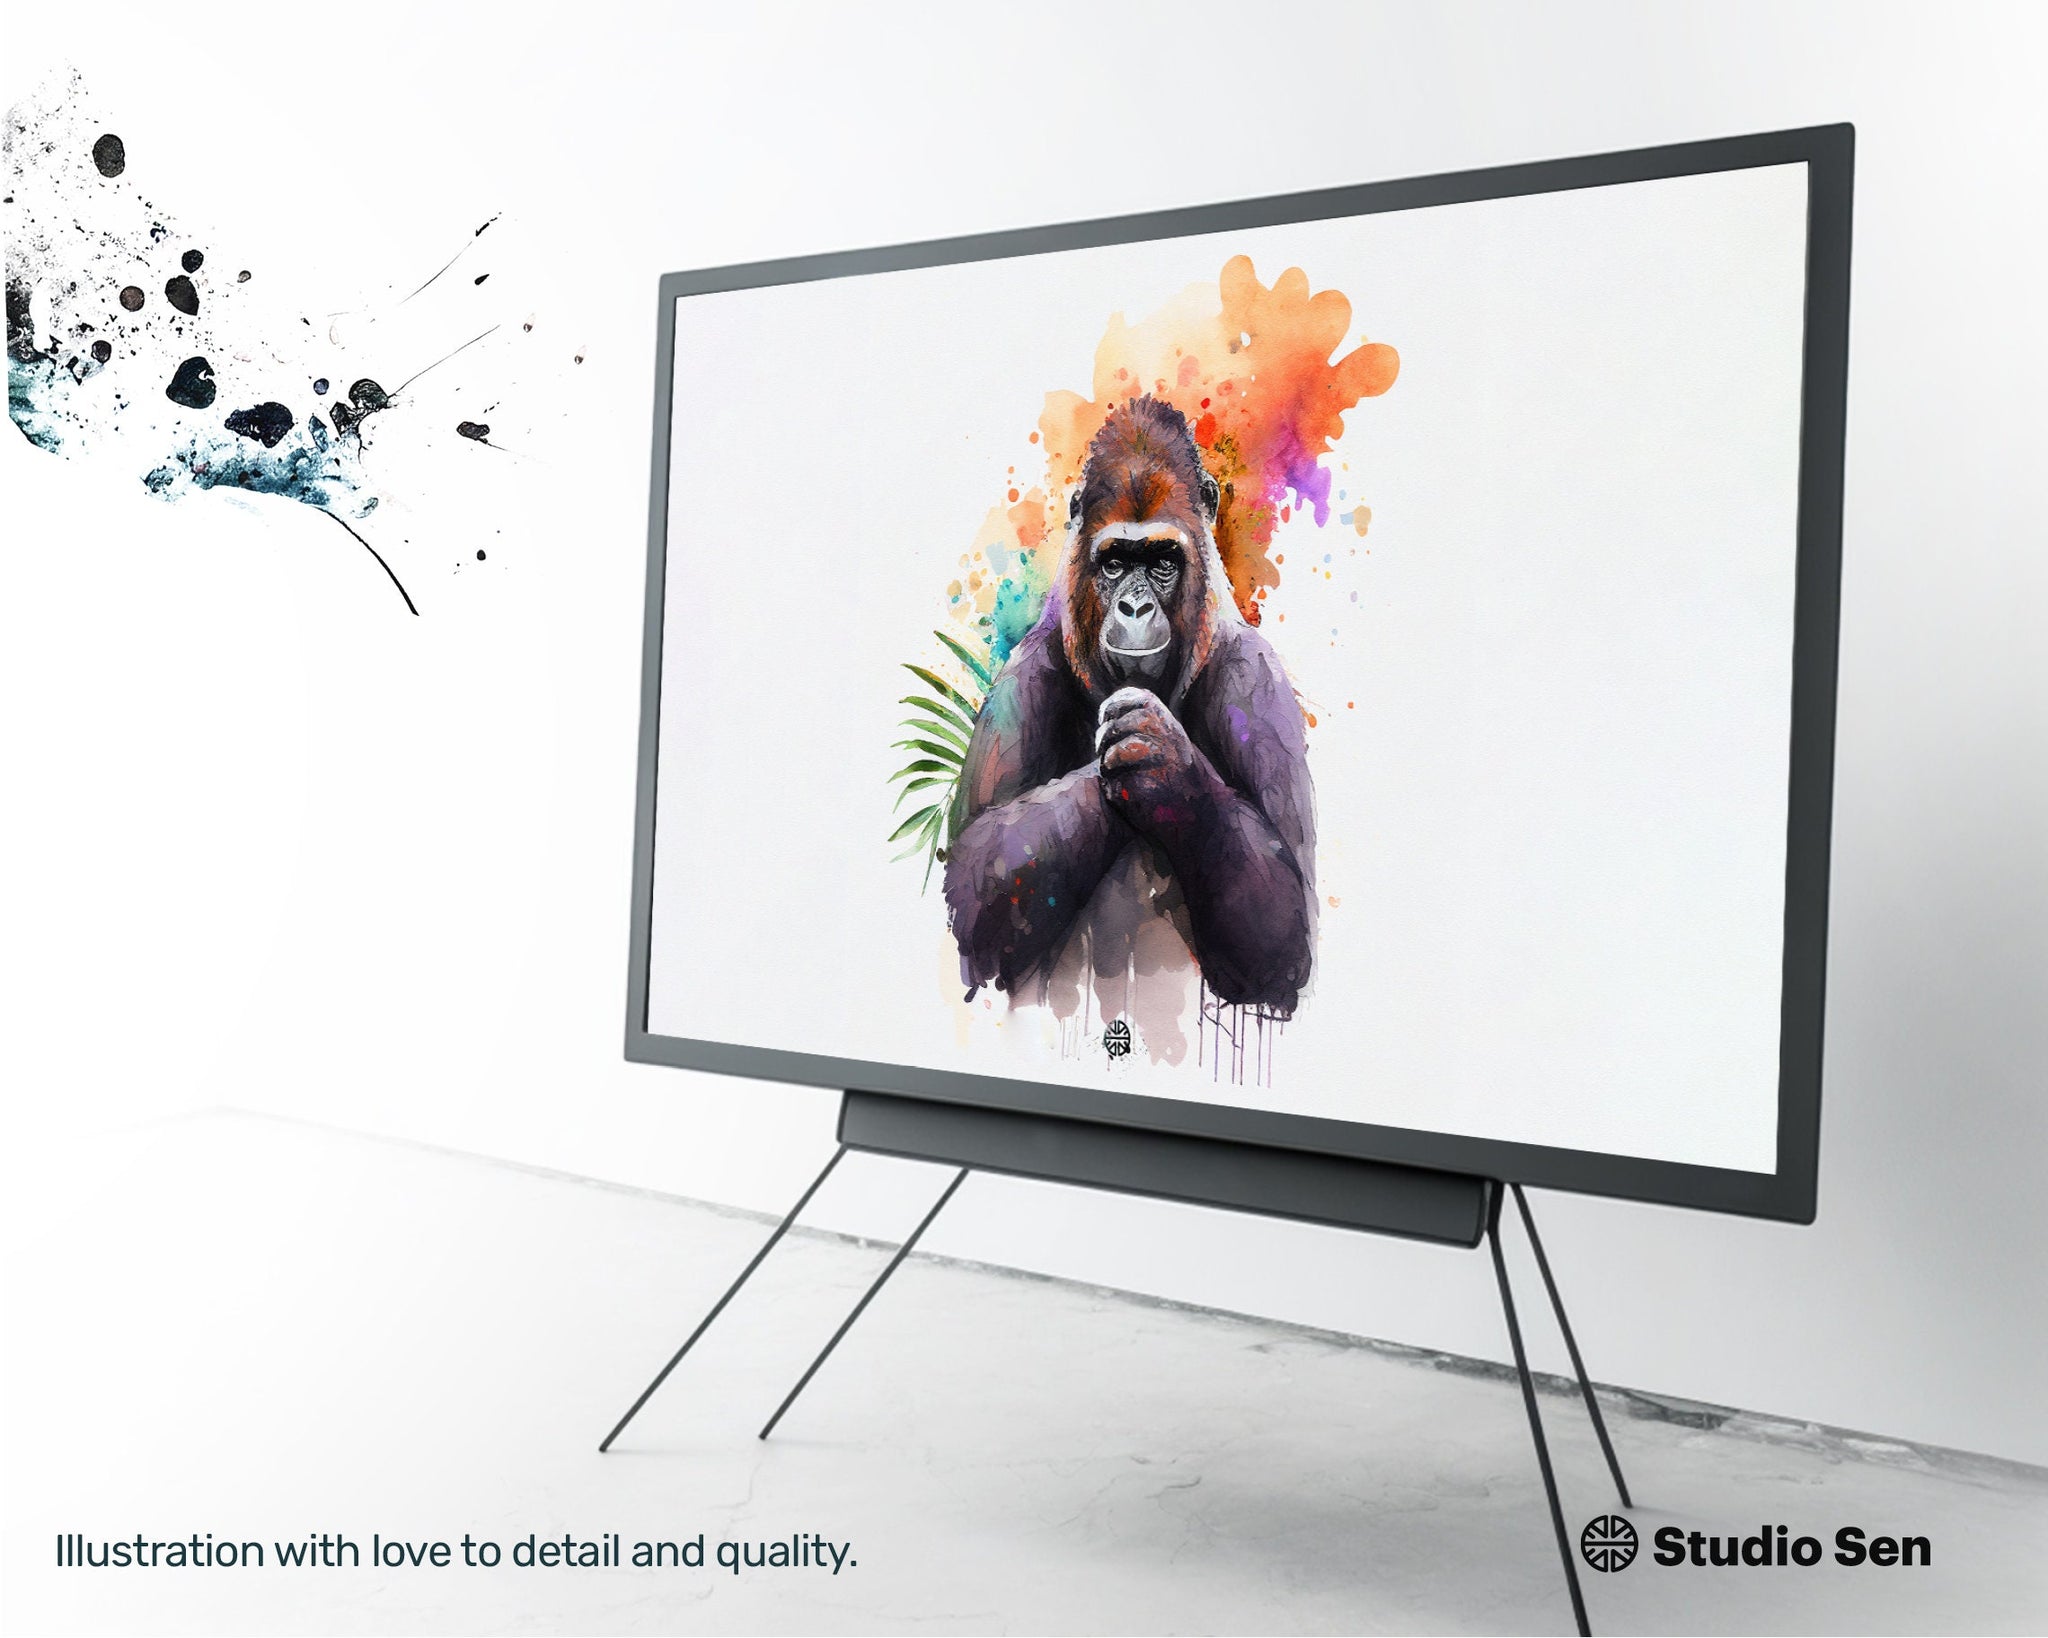 Samsung Art TV, Gorilla Endangered, premium download, drops and splashes, friendly wallpaper, art for kids